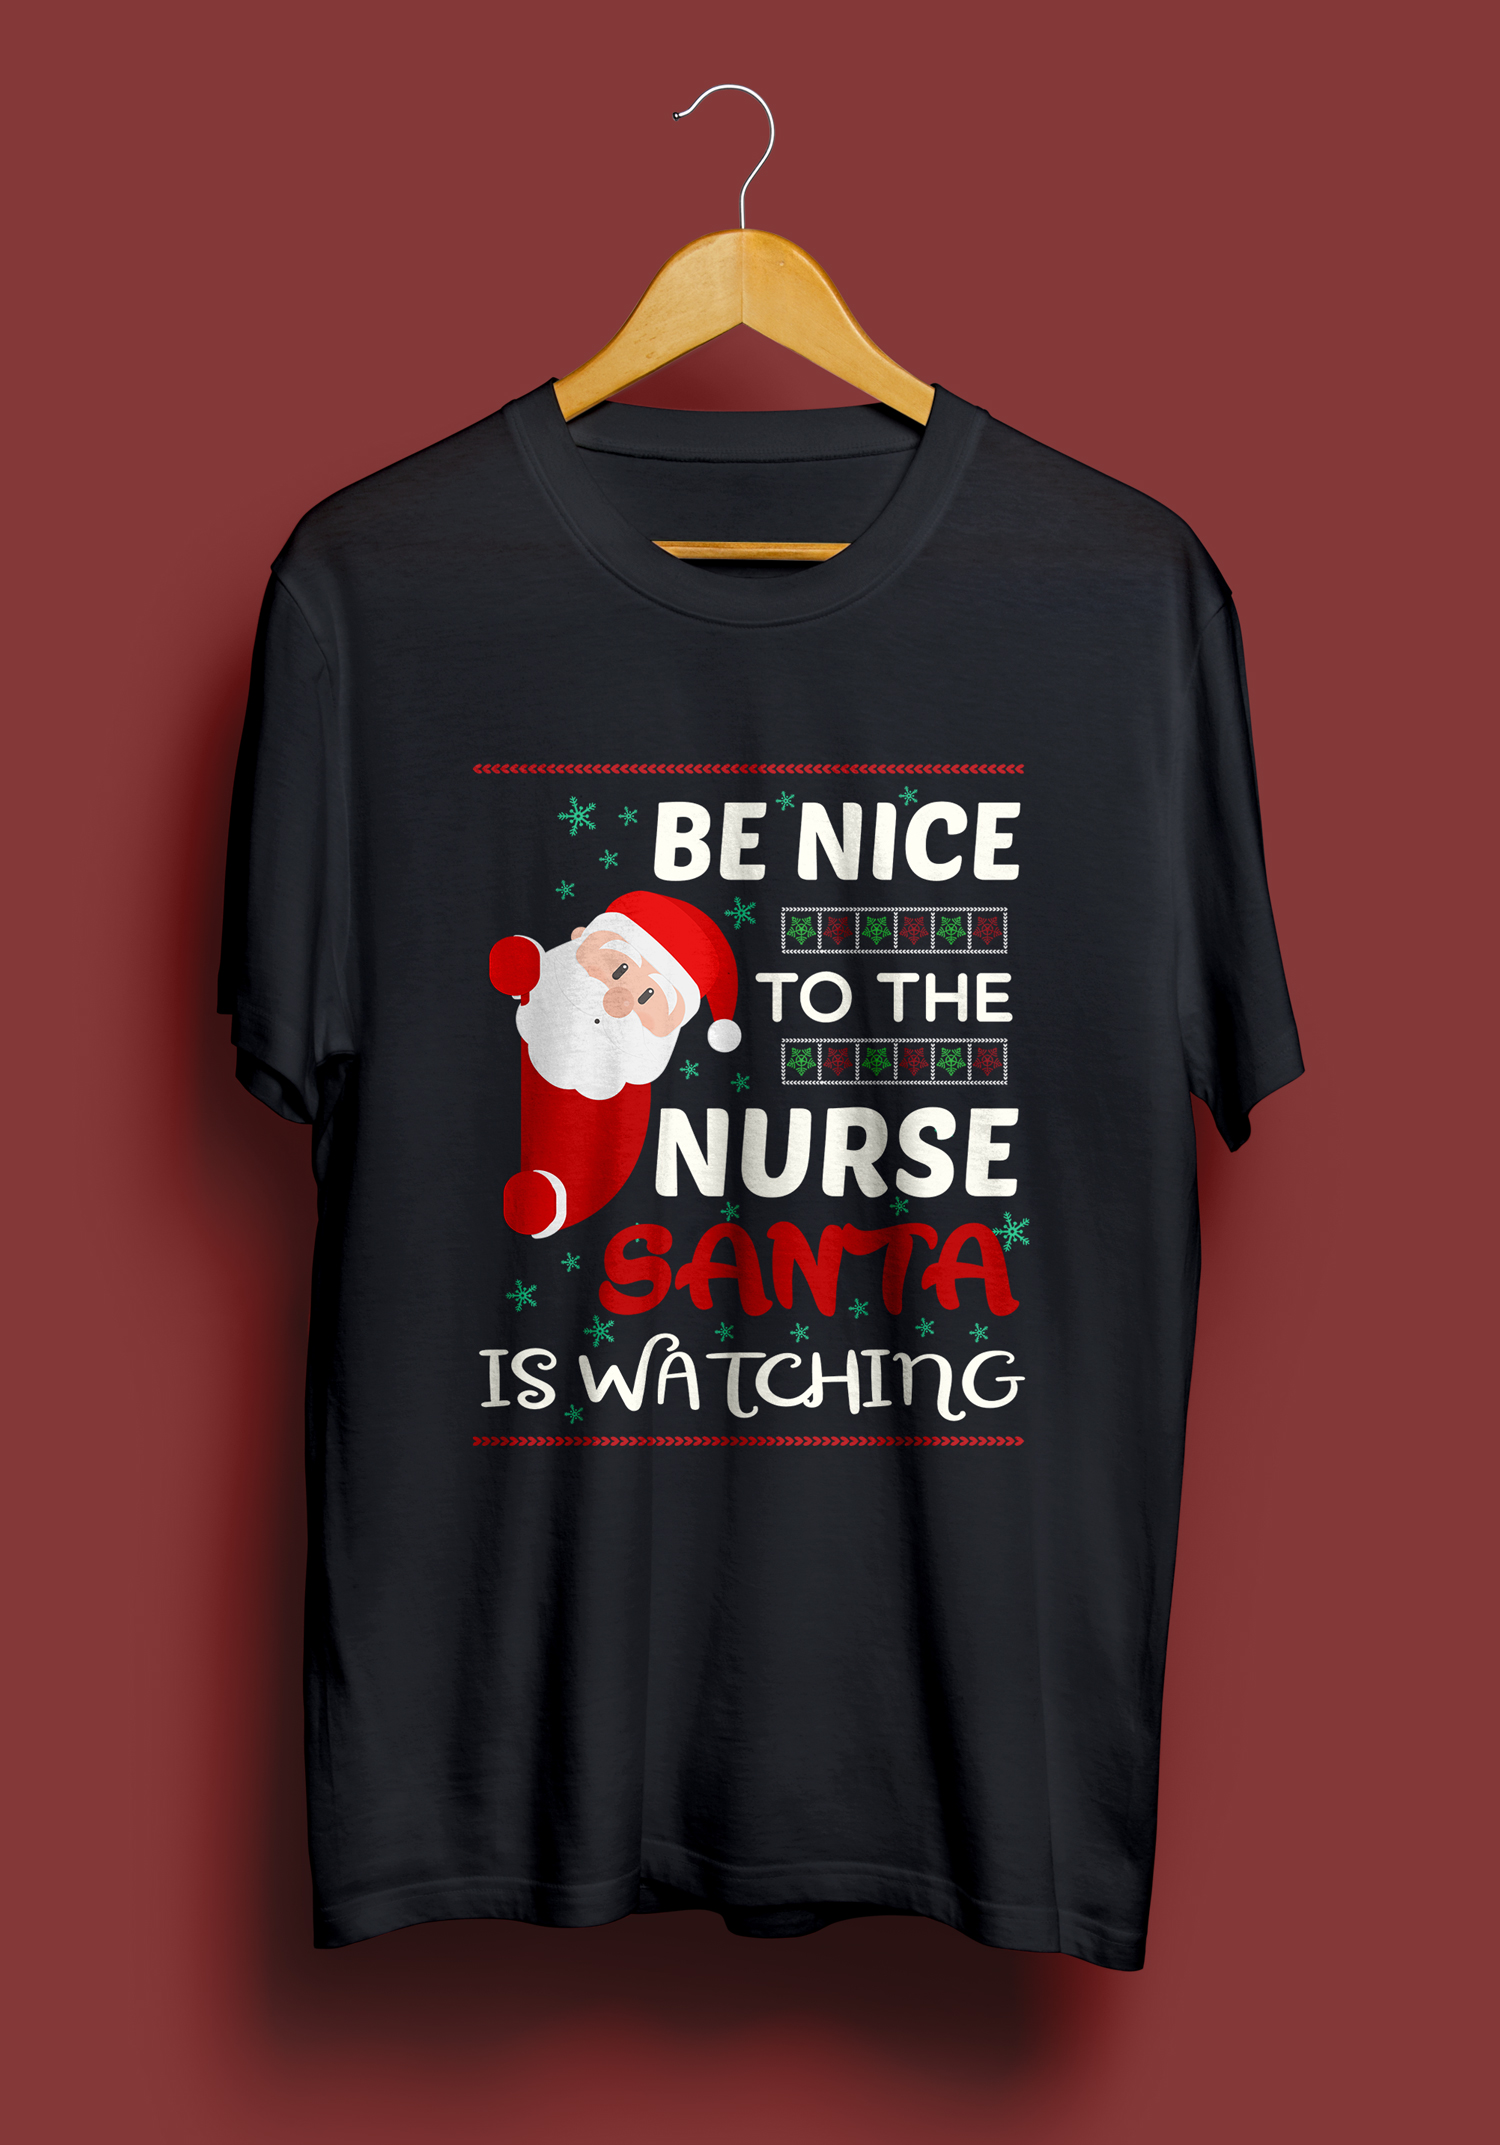 T-Shirt Design for Christmas and Nurse Niche